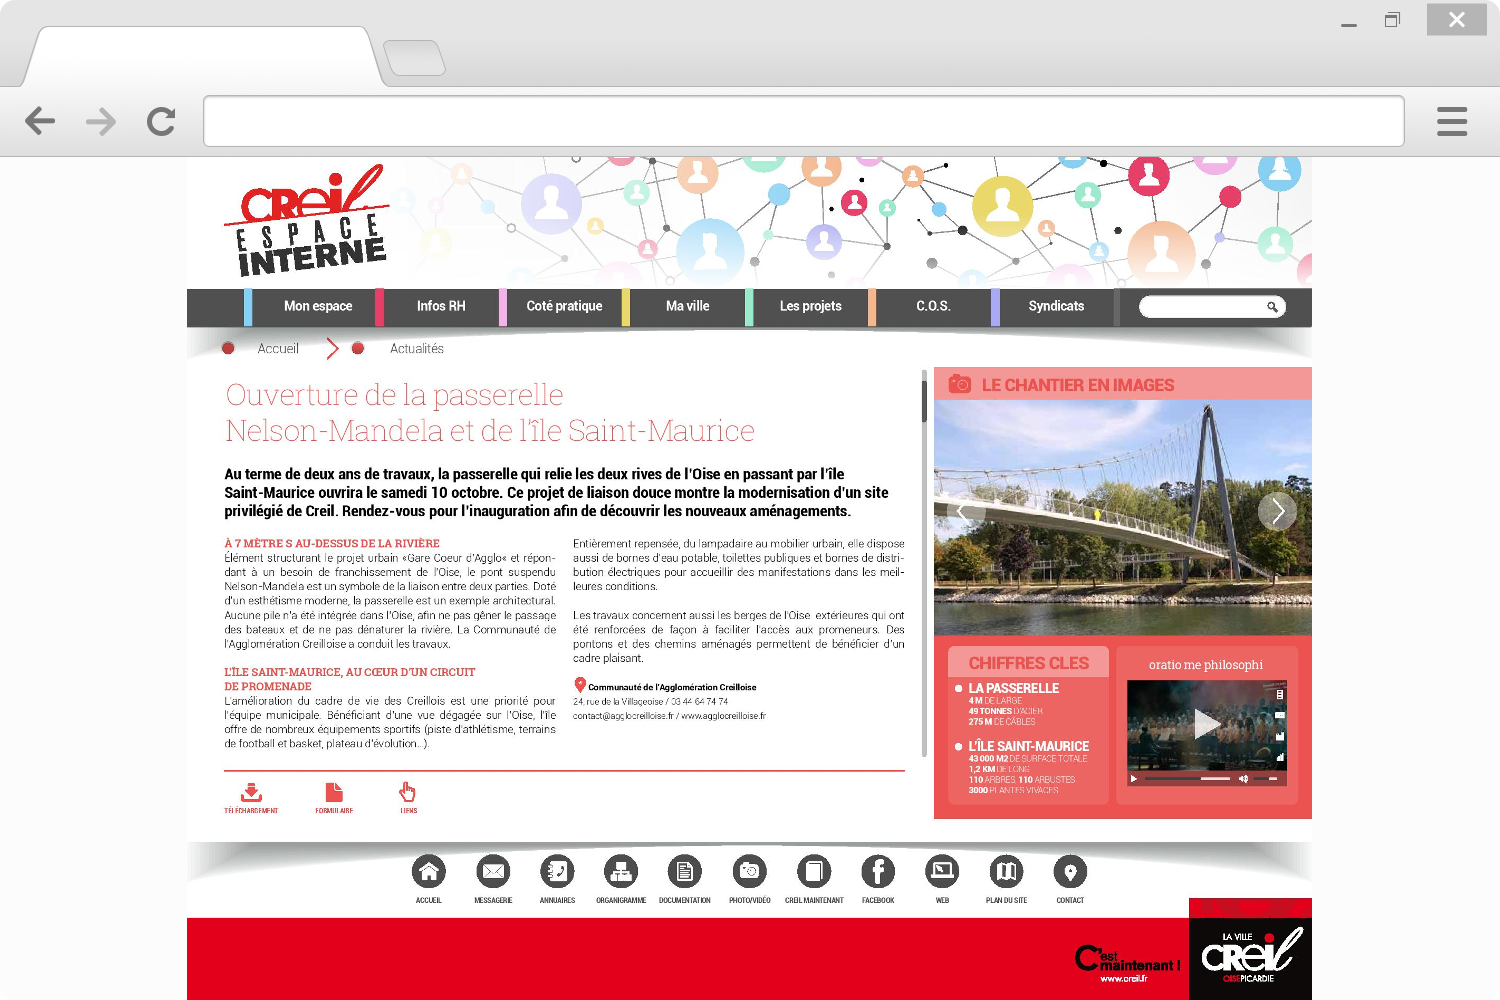 City of Creil Intranet: homepage